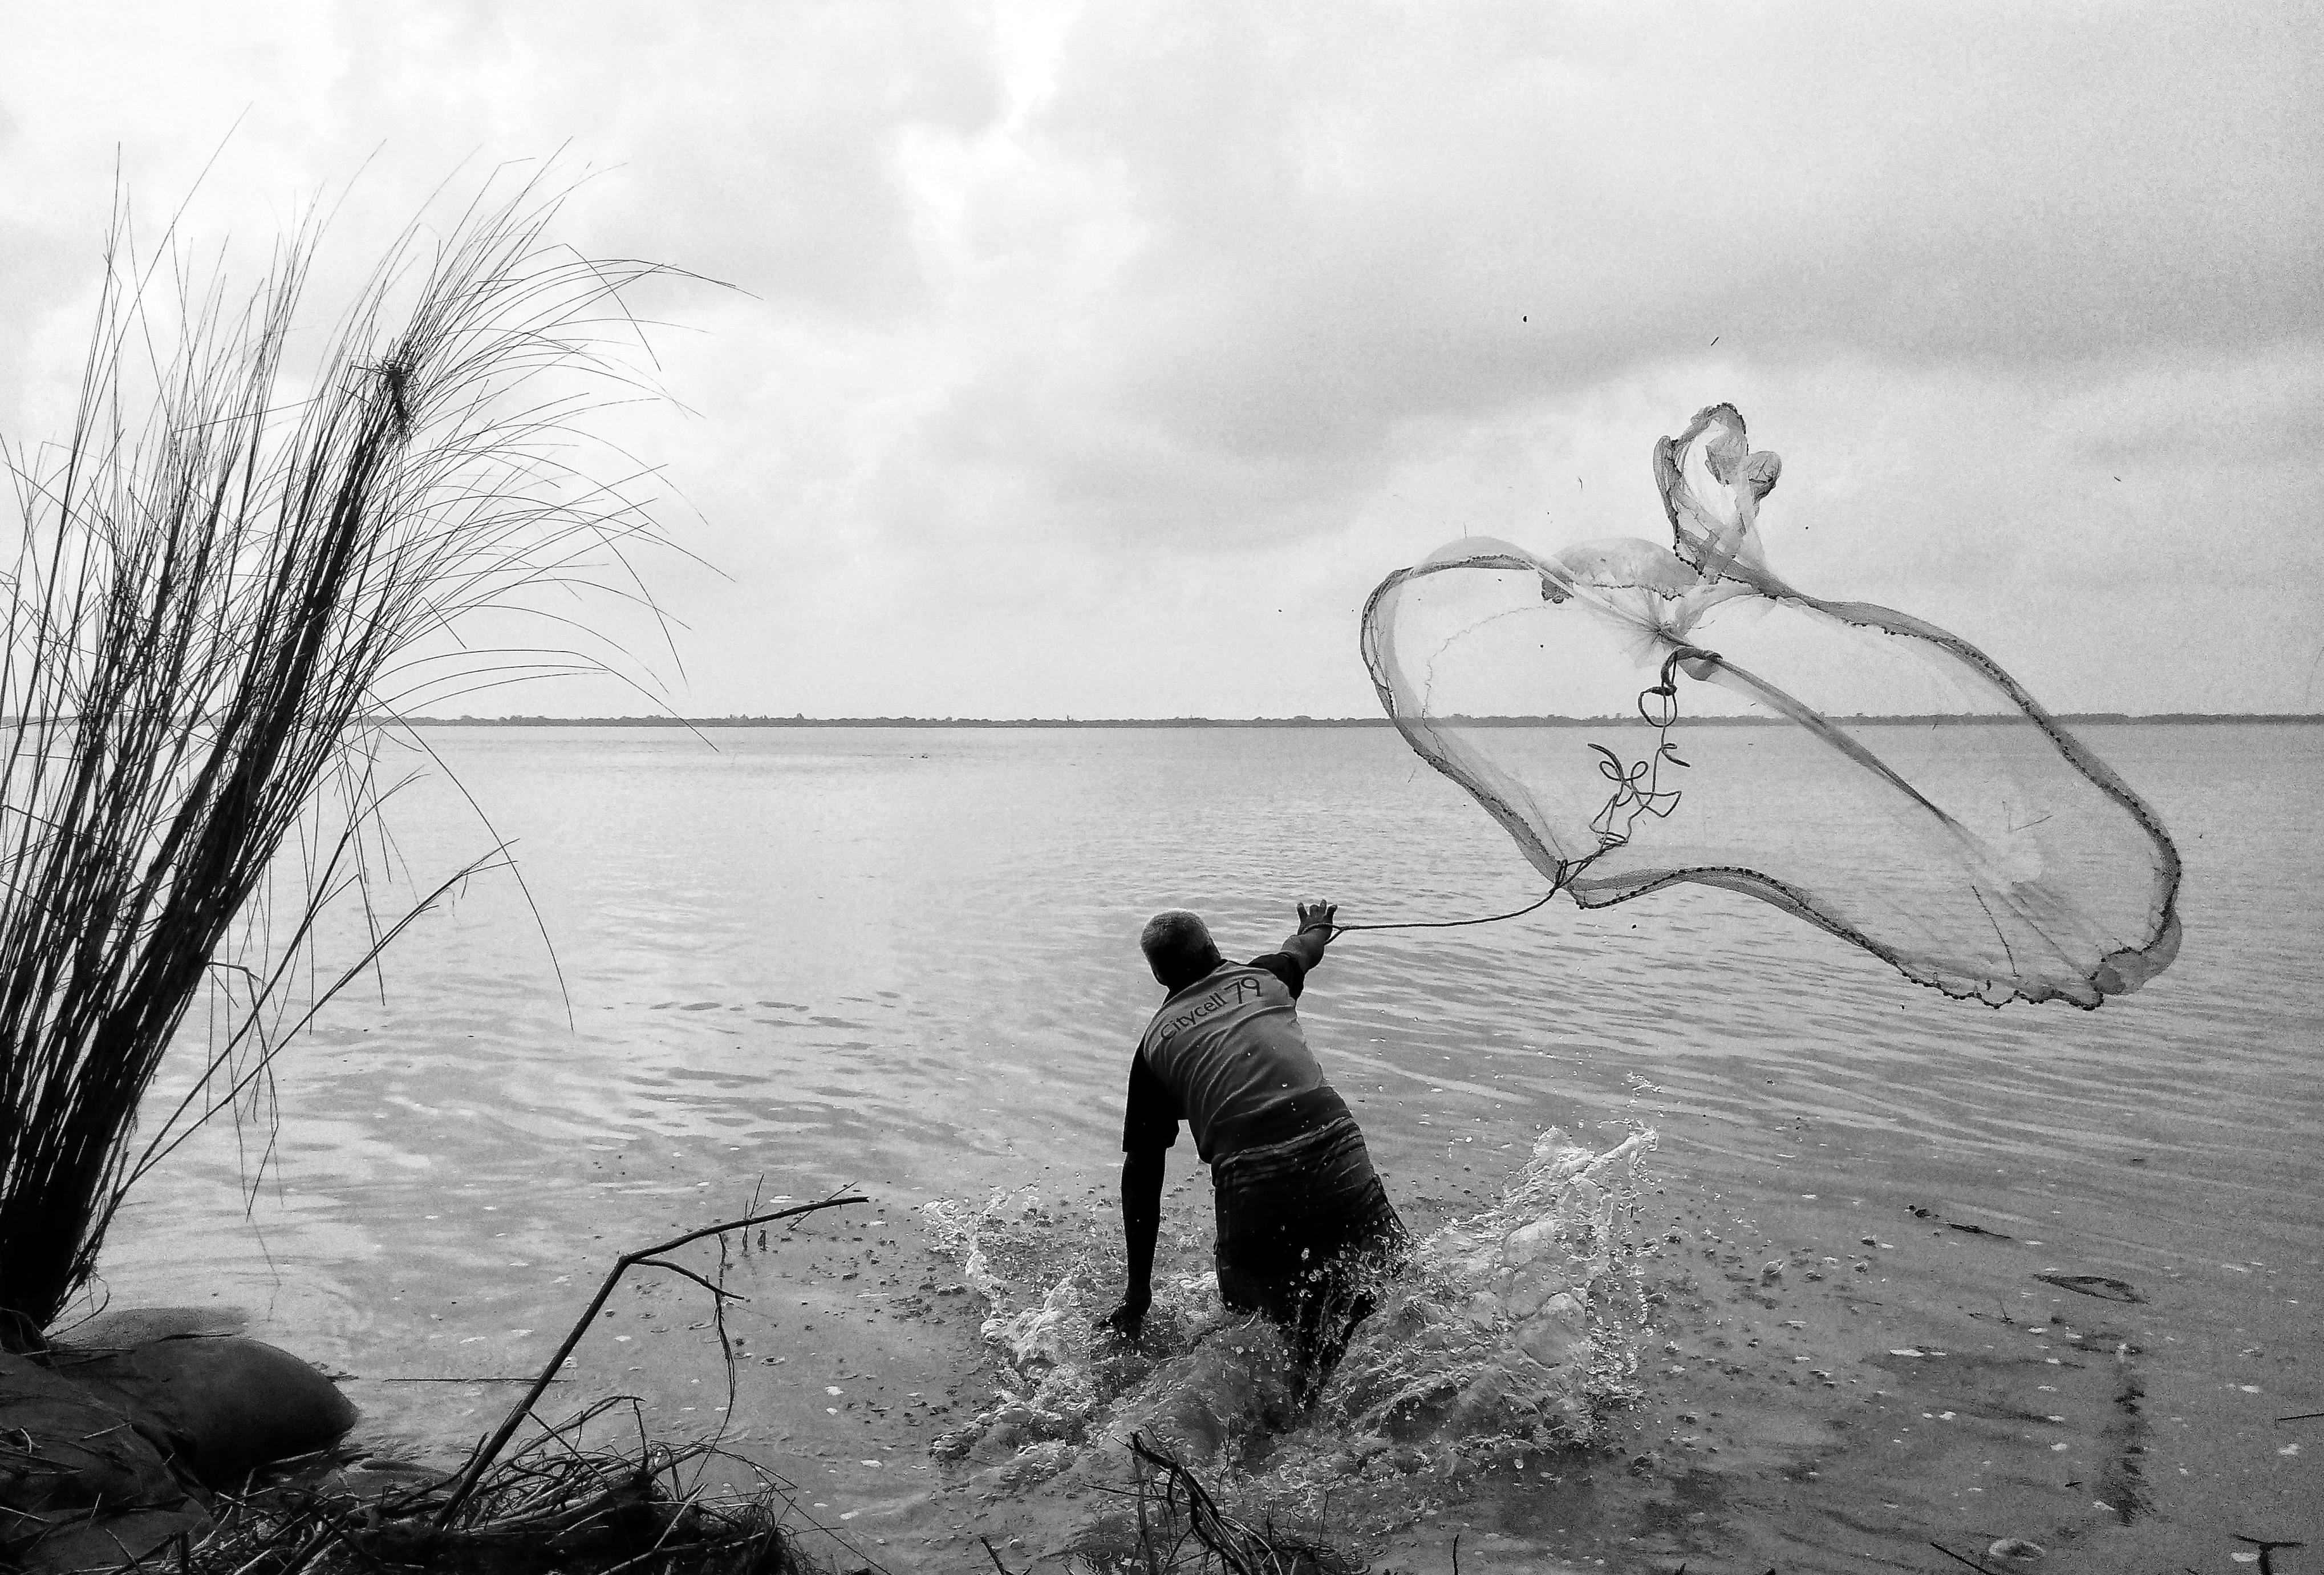 Man Throws Fishing Net Image & Photo (Free Trial)